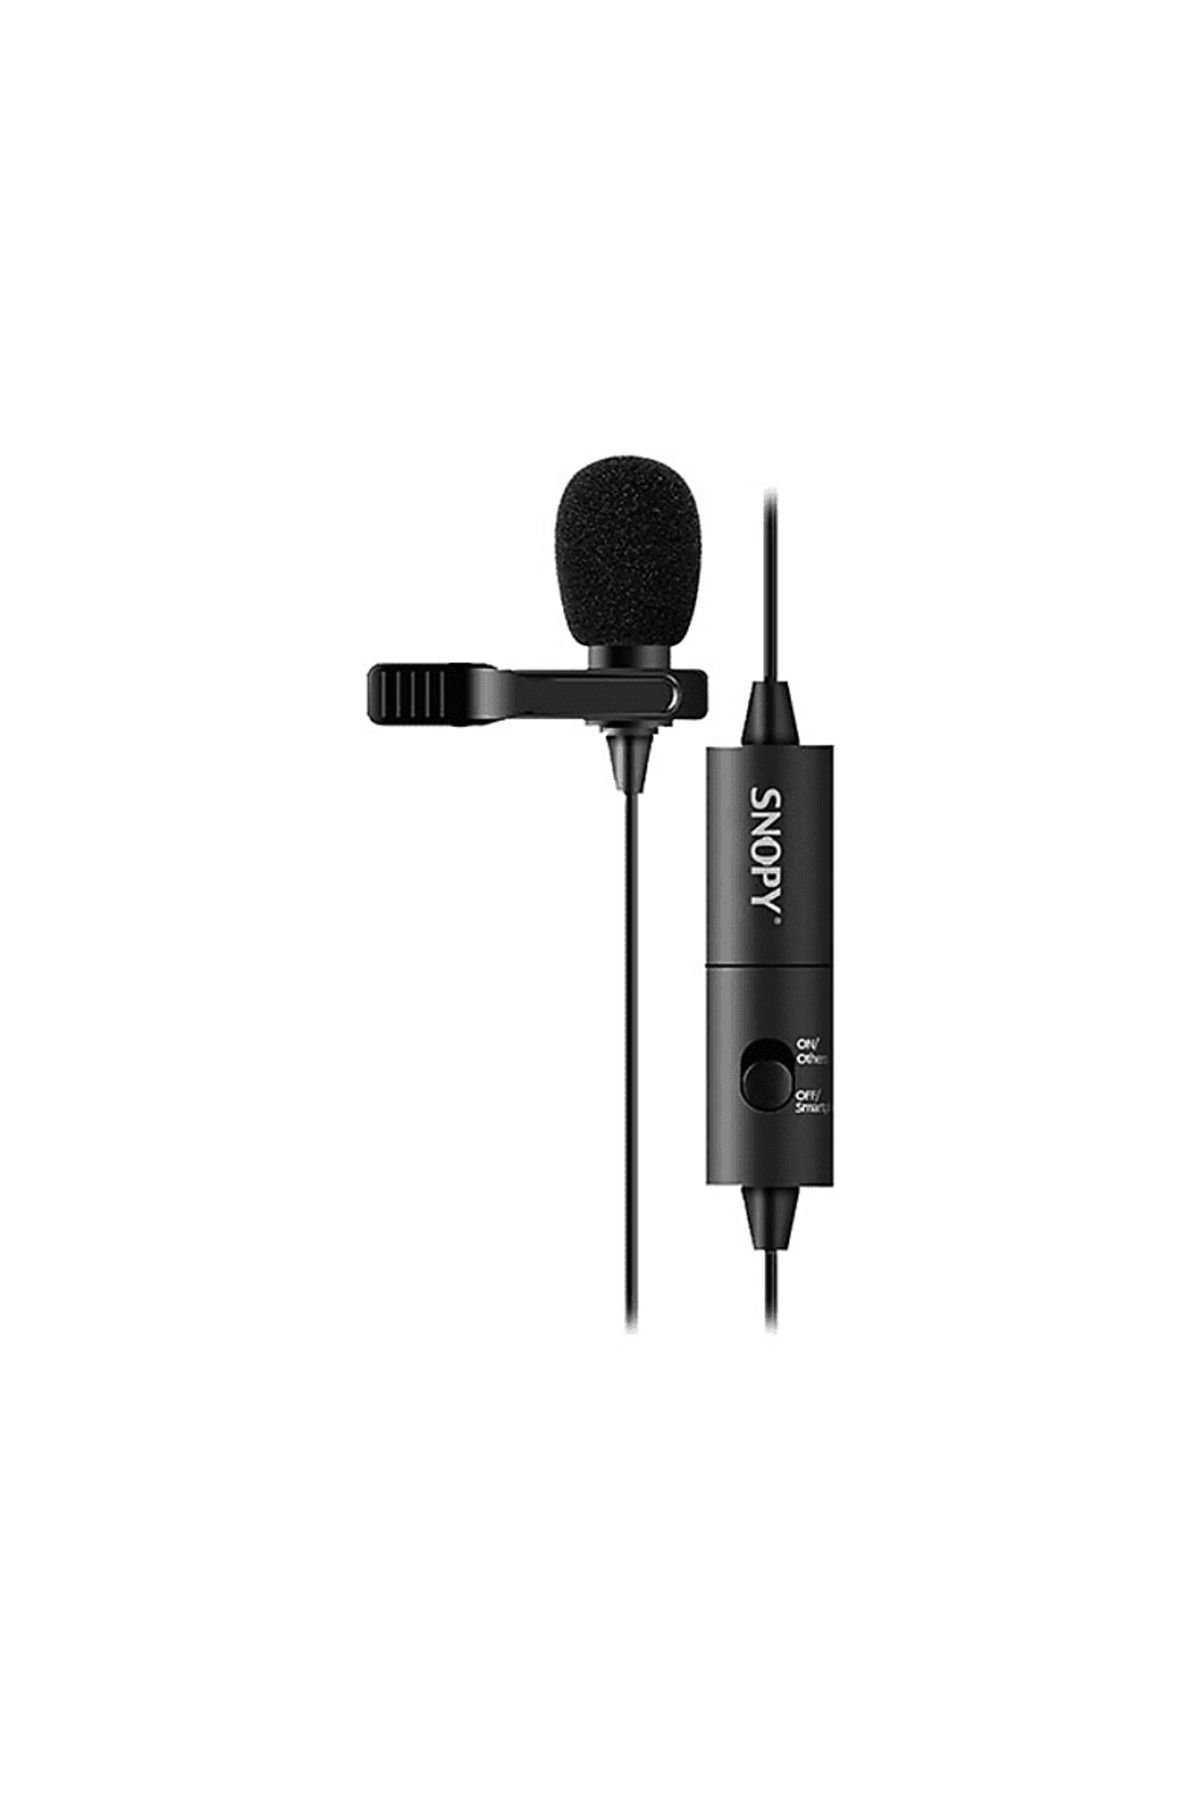 Snopy SN-100M Yaka Mikrofonu Siyah